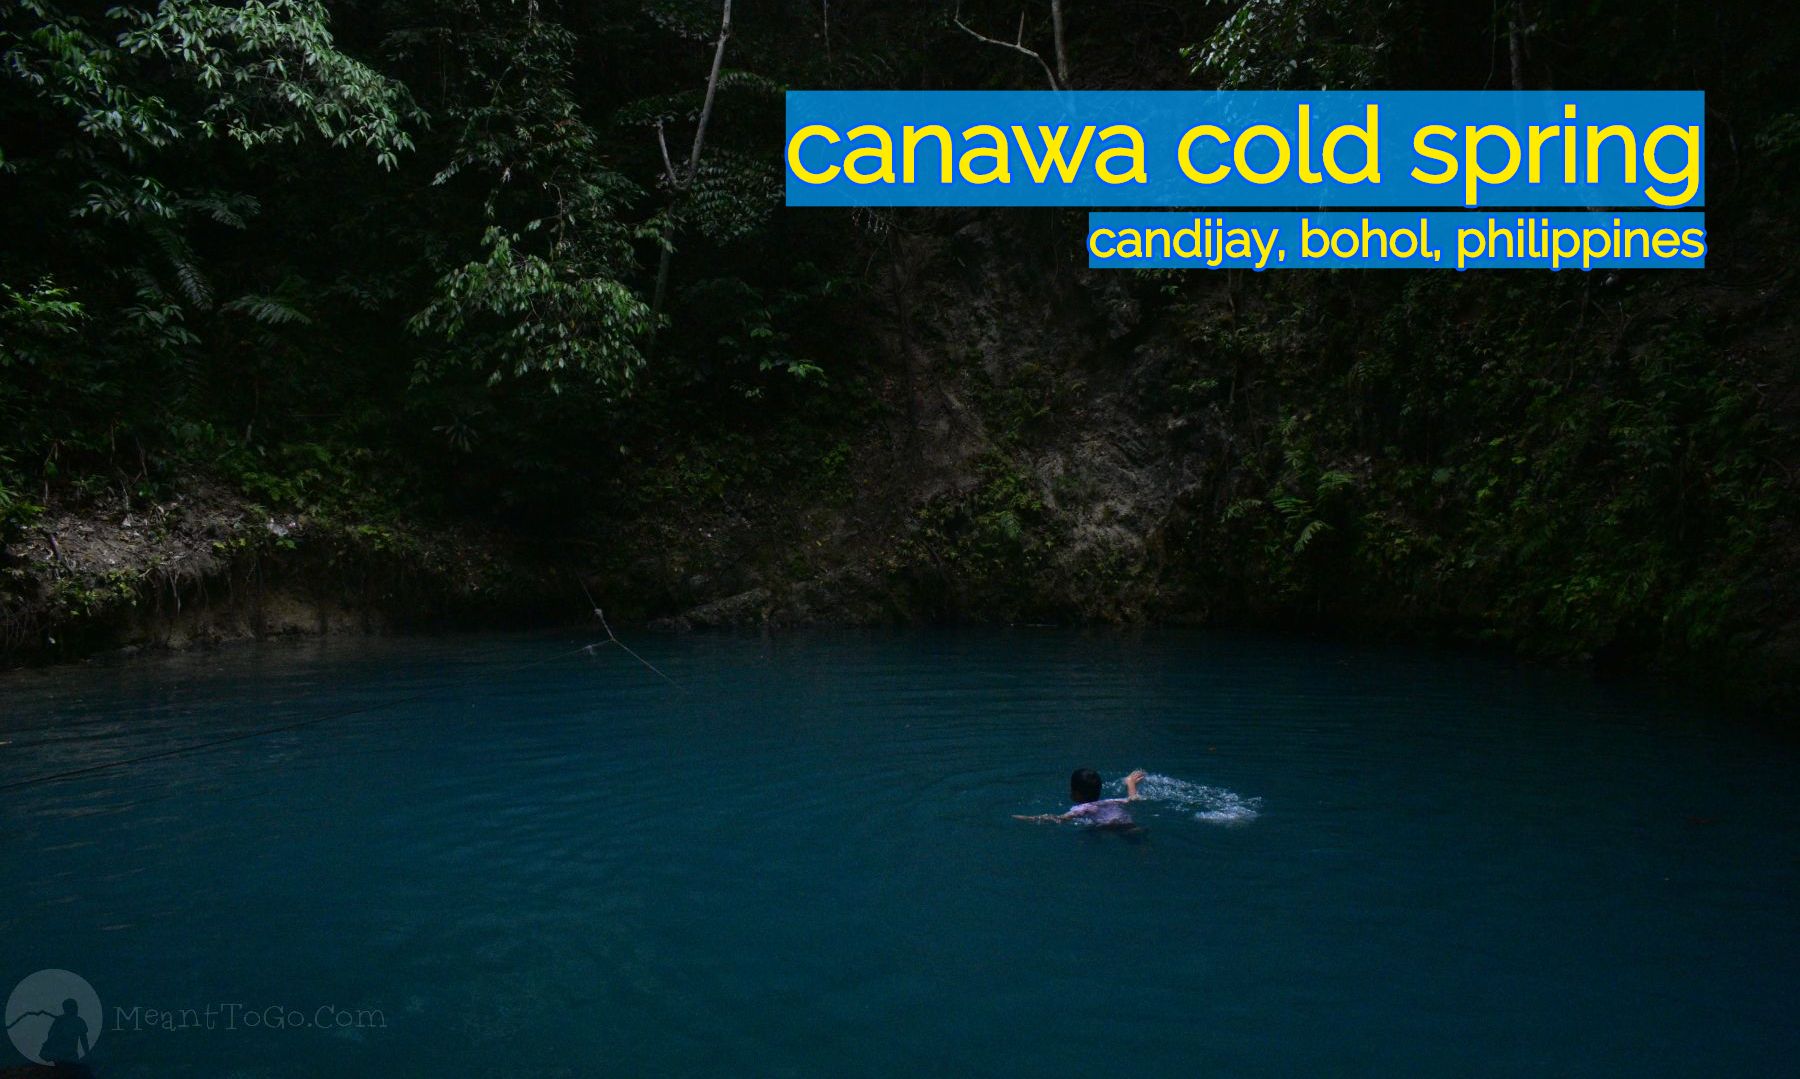 Canawa cold spring, bohol